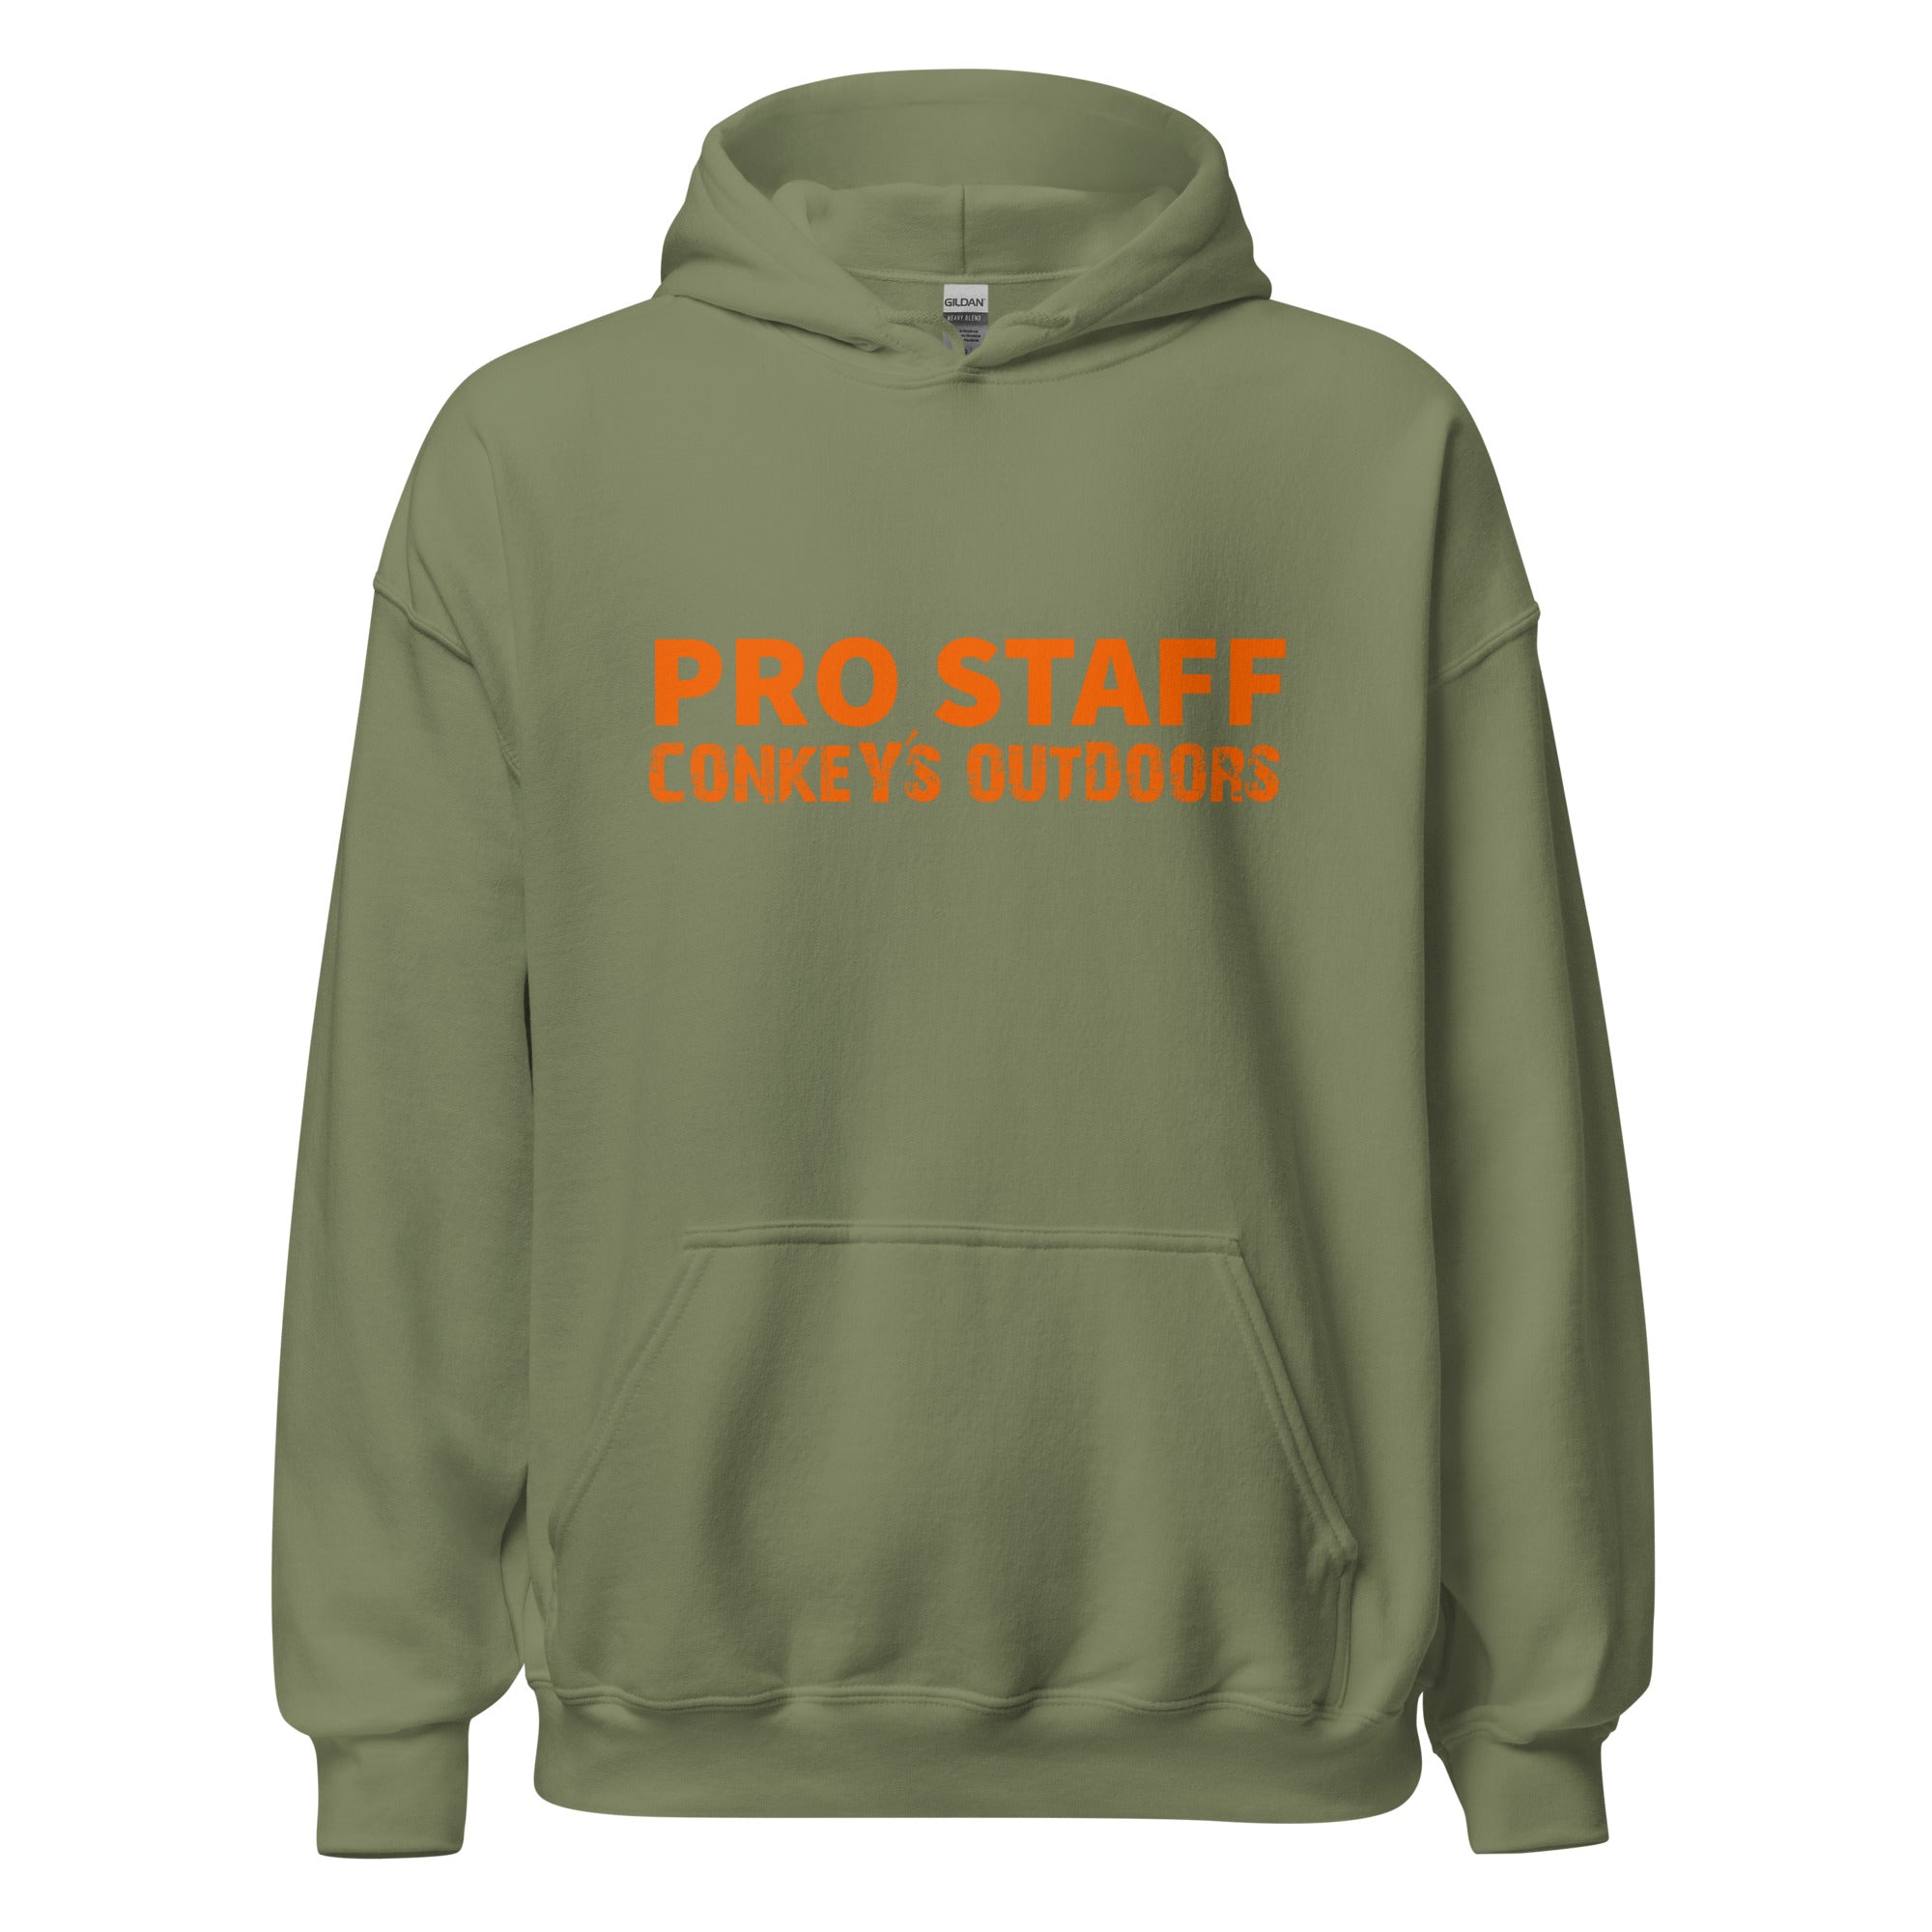 Pro Staff Hoodie